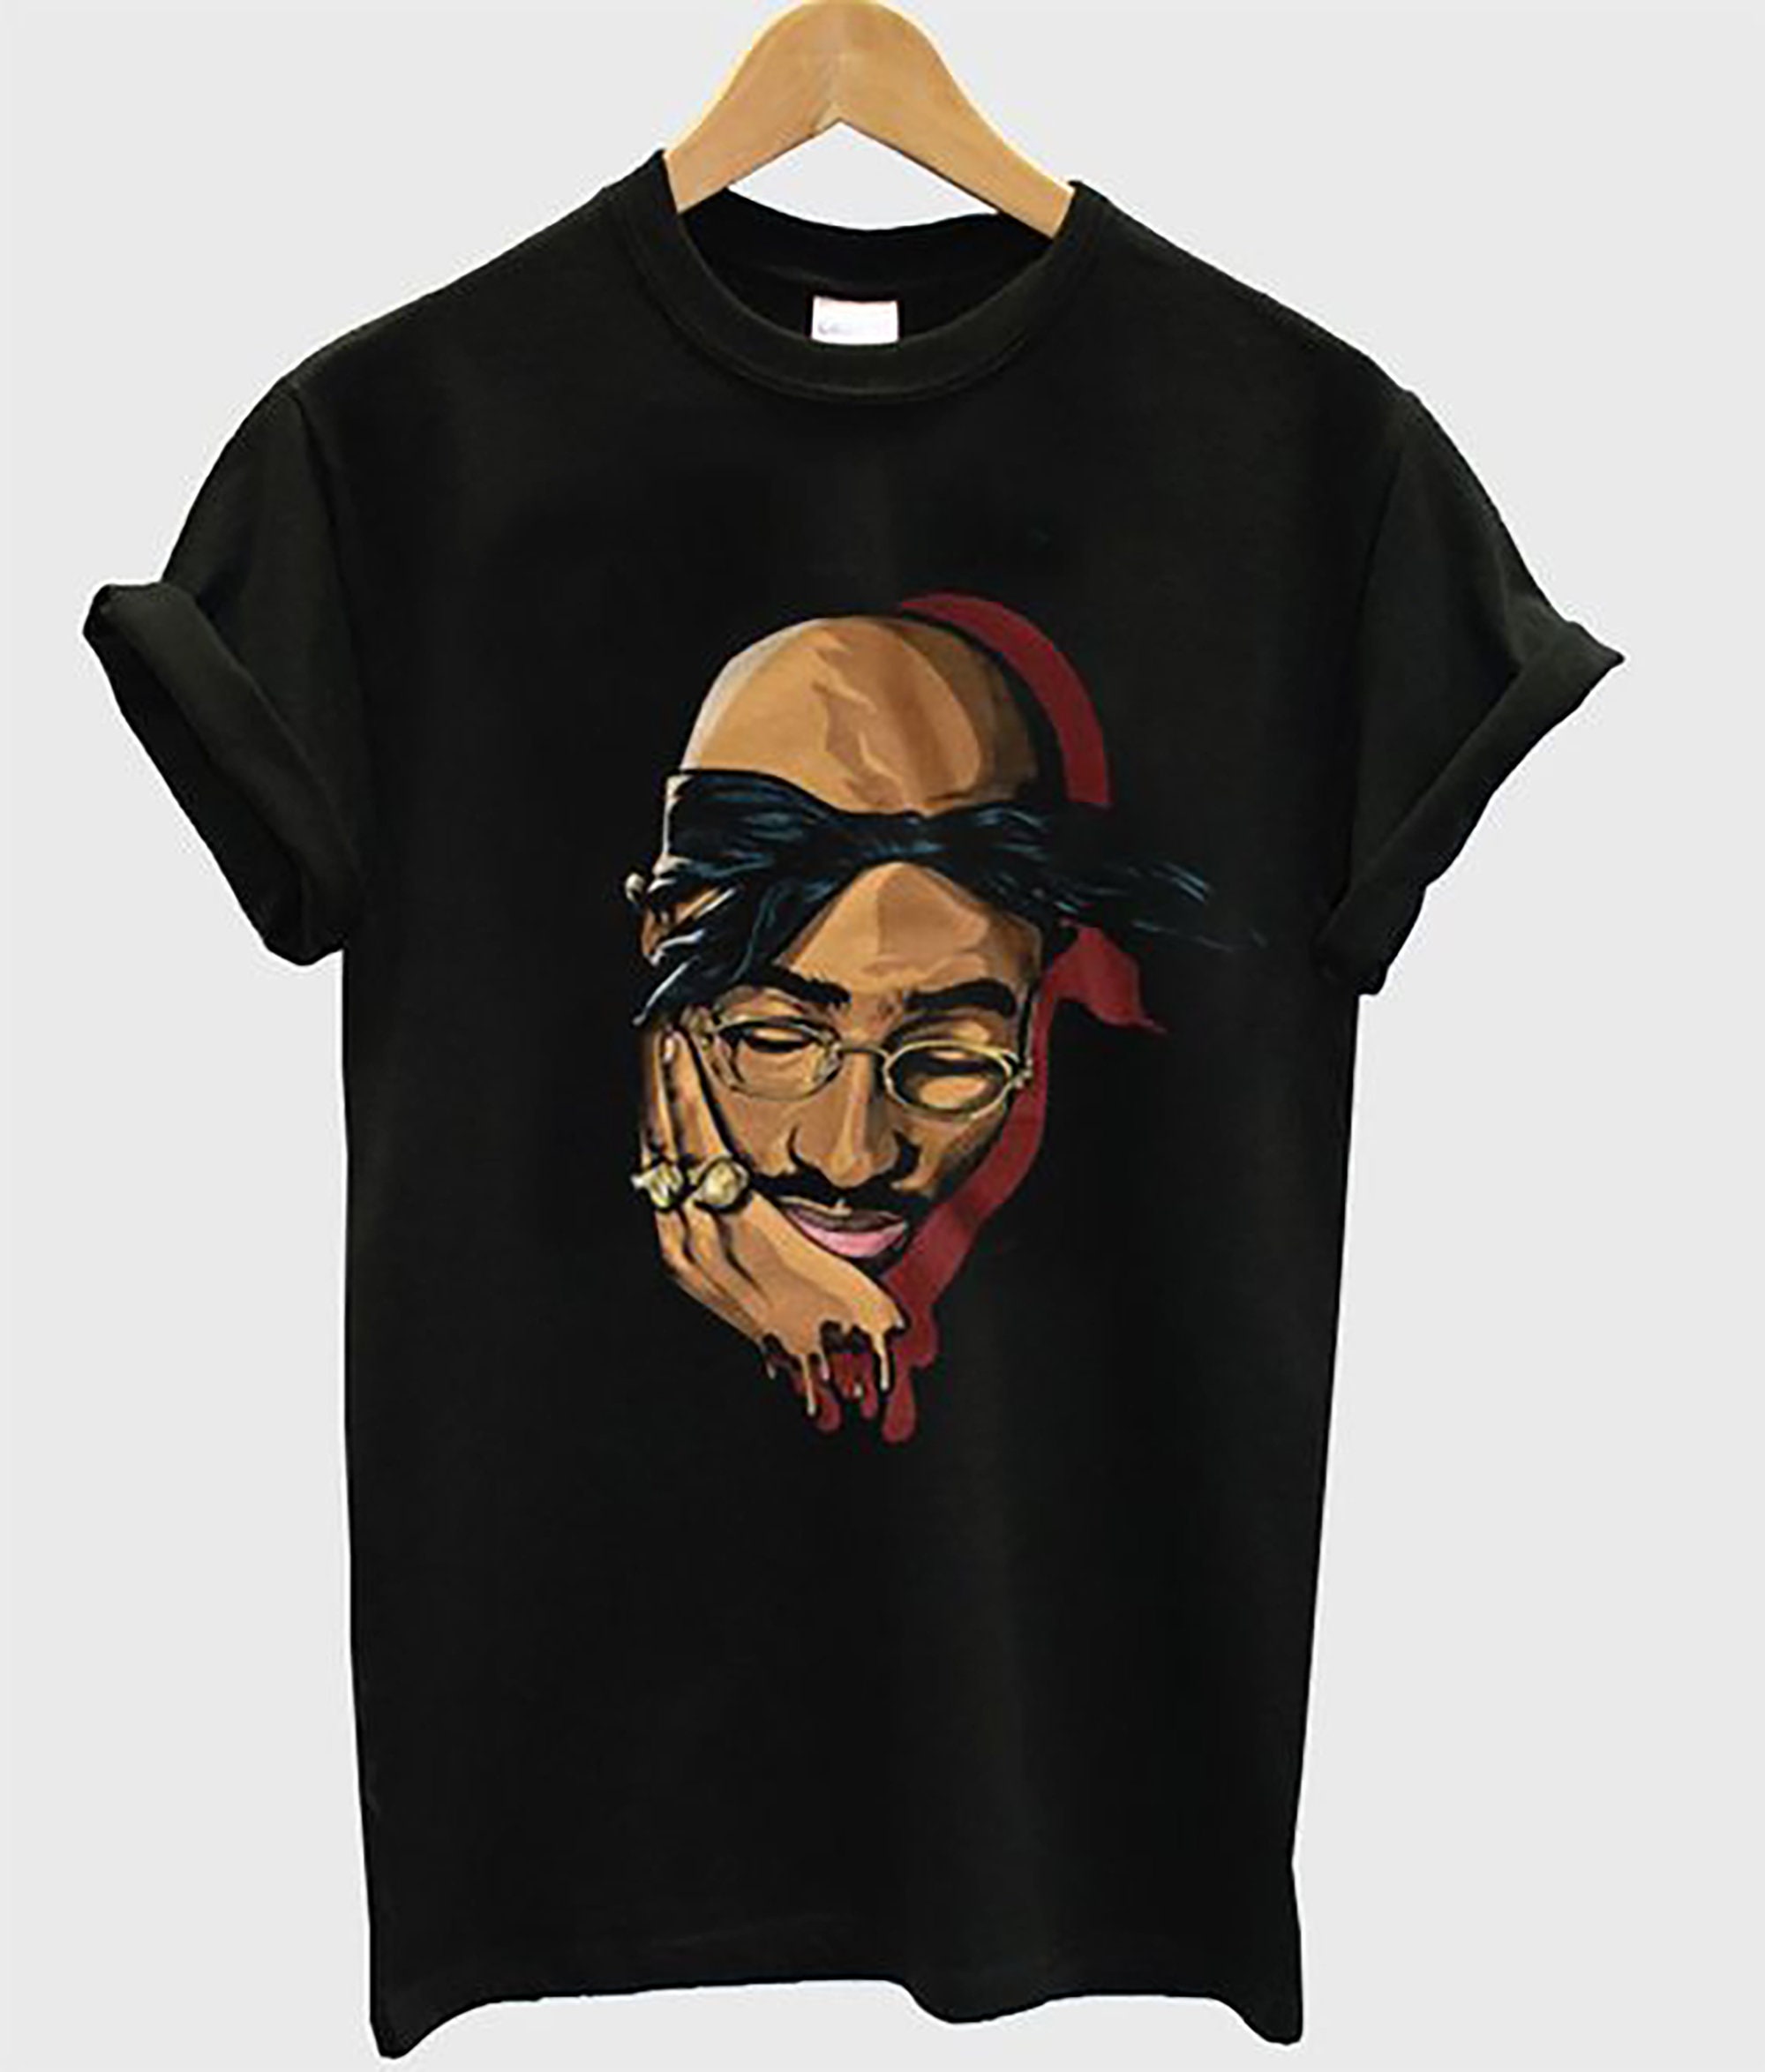 2pac-graphic-t-shirt-tupac-shakur-hip-hop-tee-men-s-and-etsy